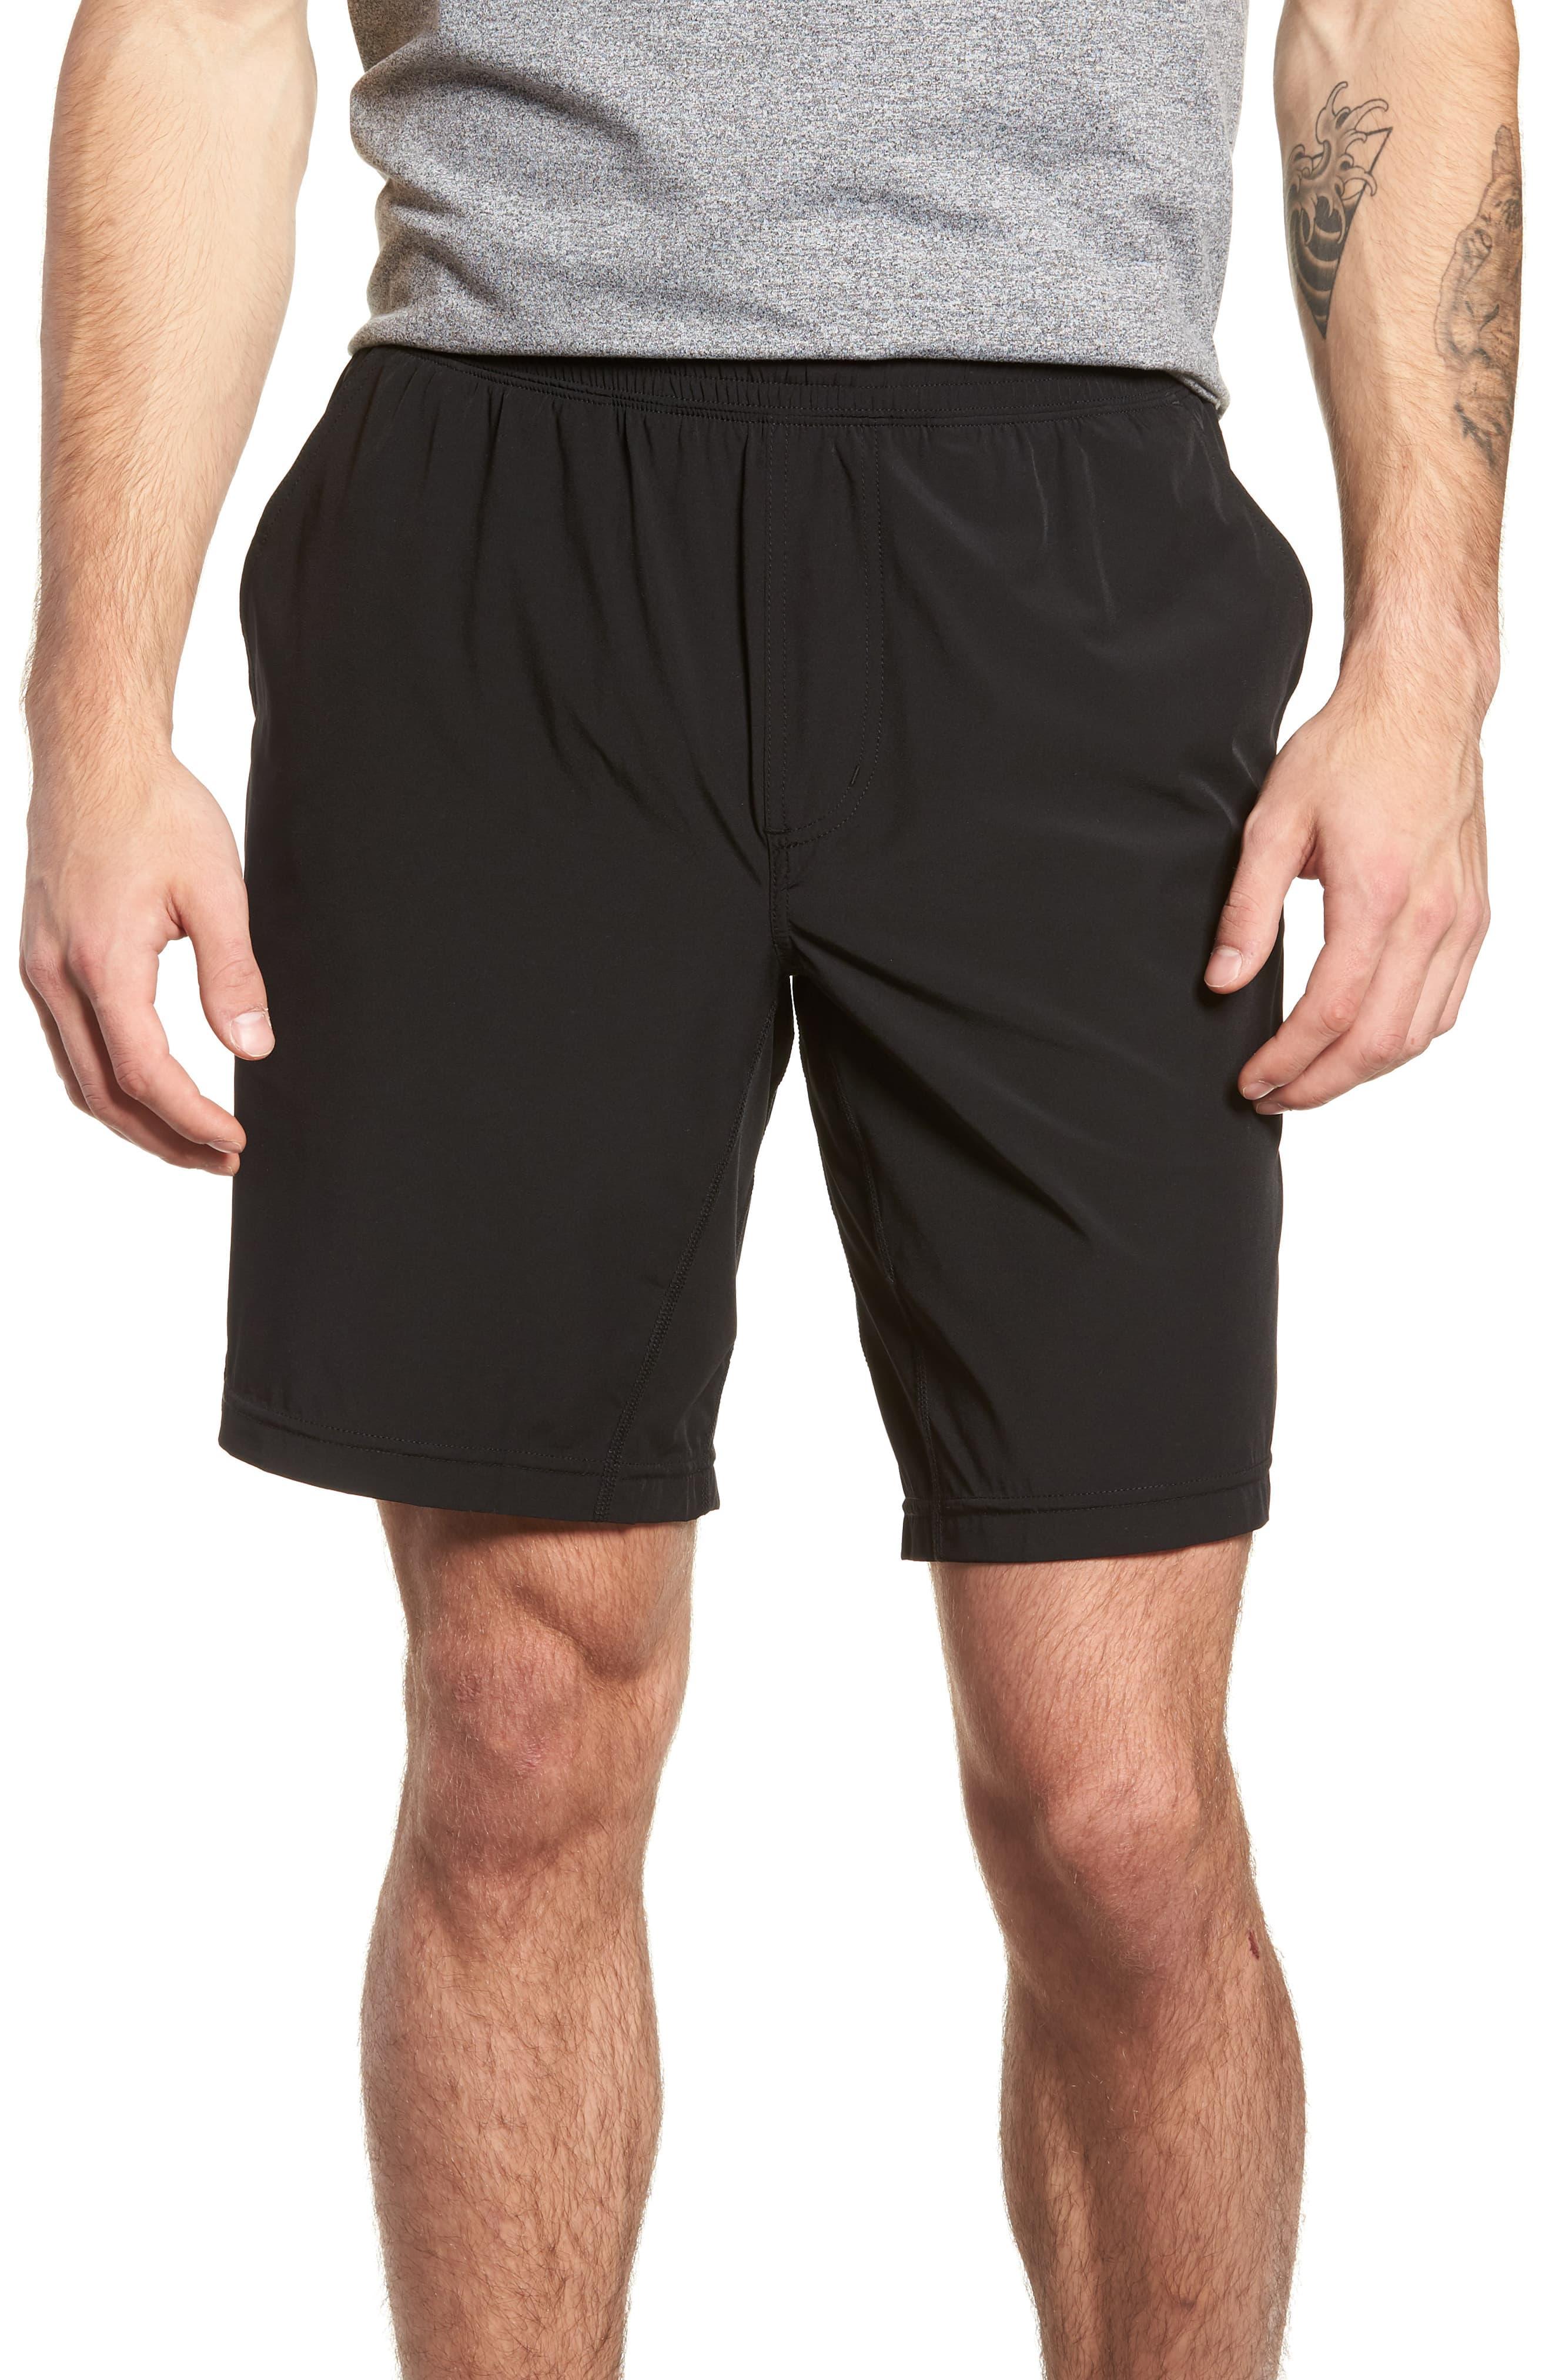 Rhone Mako Training Shorts in Black for Men - Lyst